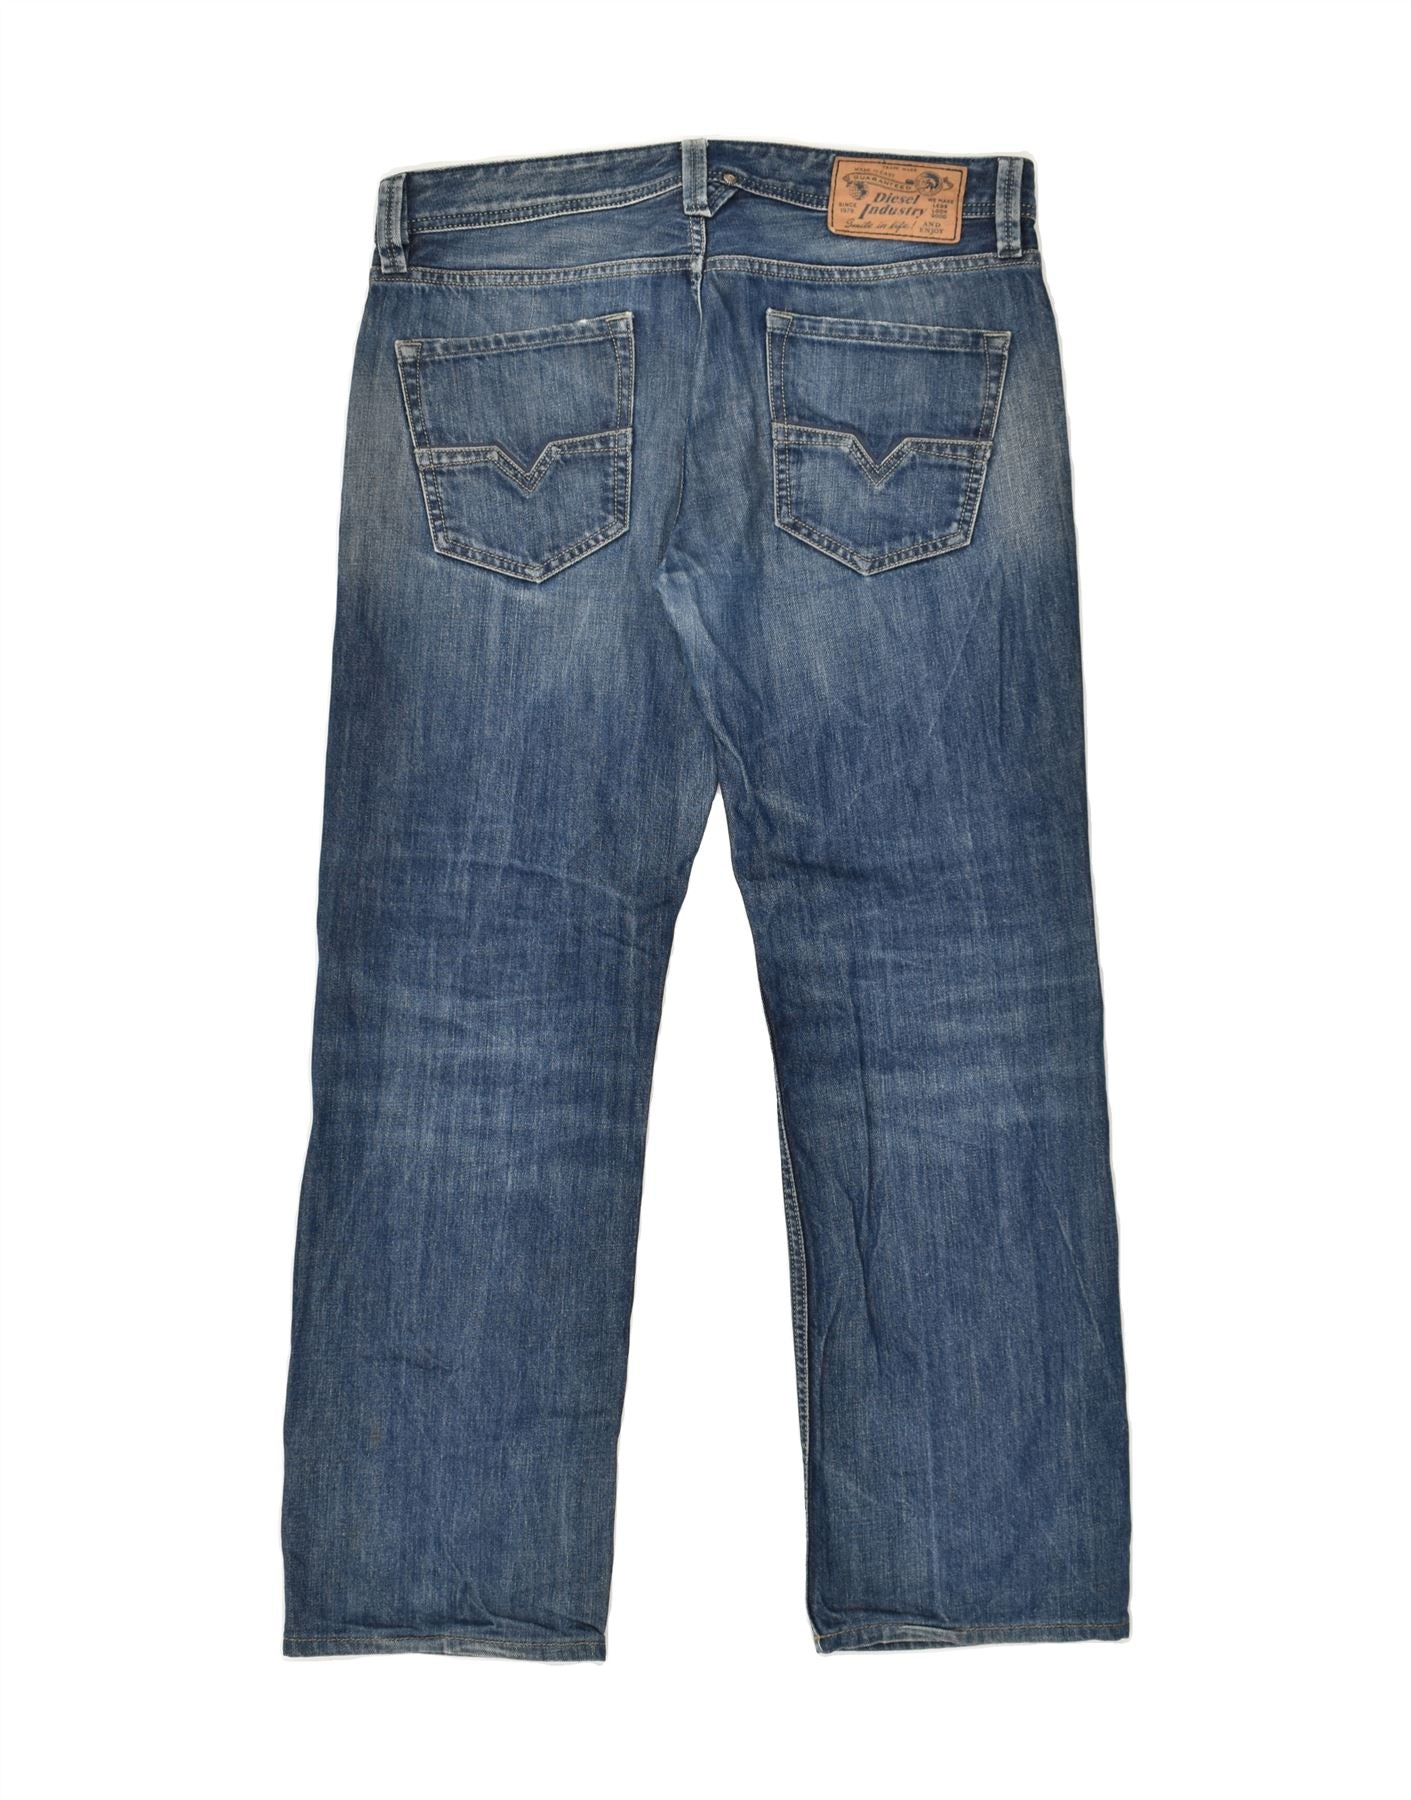 NAUTICA Womens Straight Jeans W30 L27 Blue Cotton